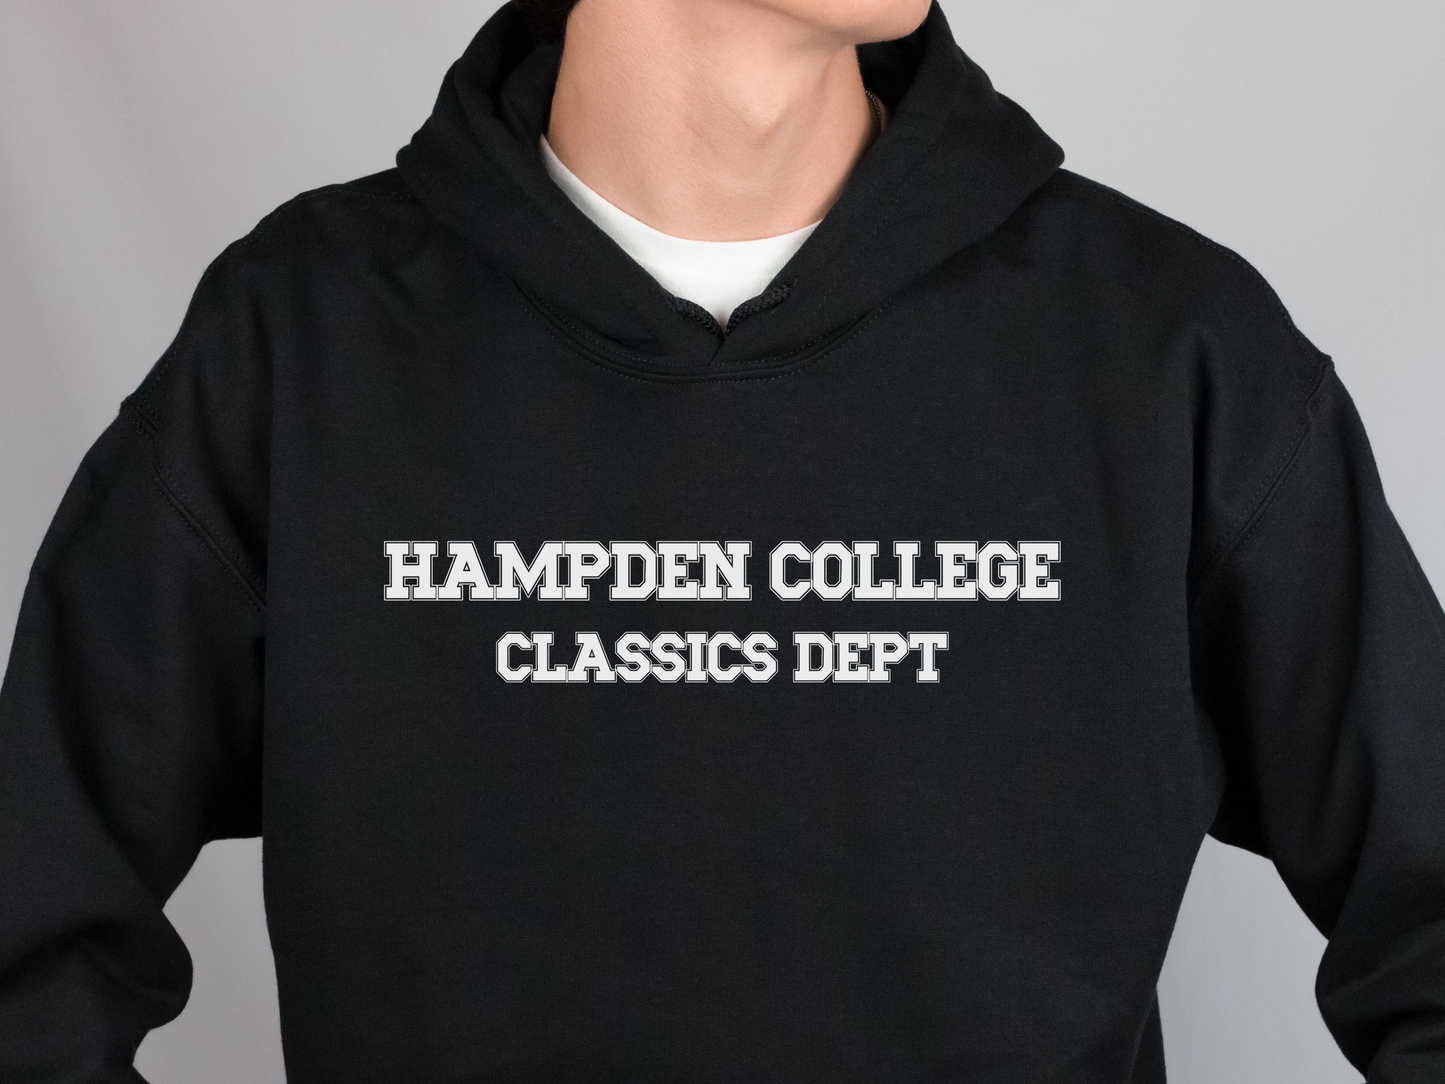 Hampden College Classics Department Hoodie, The Secret History, Dark Academia, Bookish Gifts